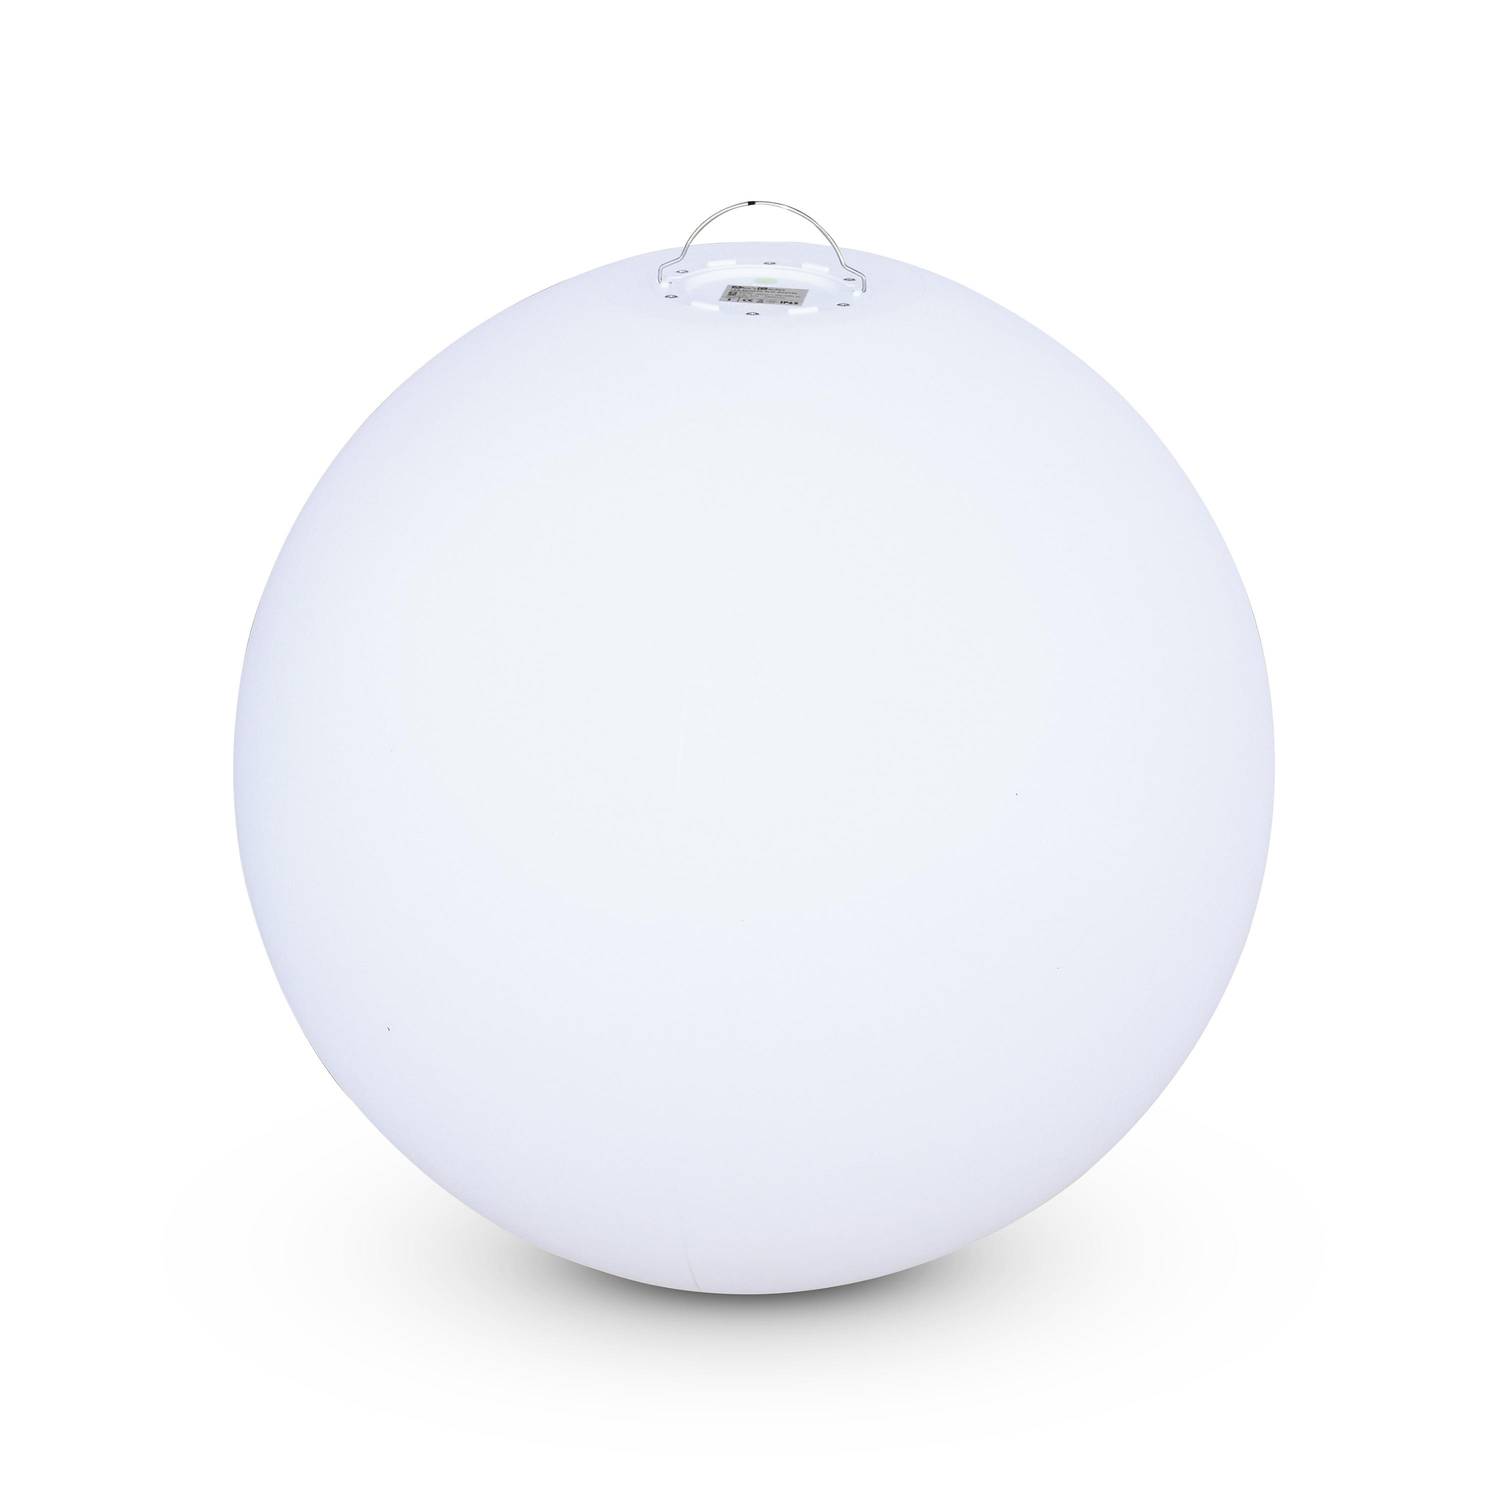  Sfera LED 60cm - Sfera luminosa decorativa, Ø60cm, bianco caldo, telecomando Photo2